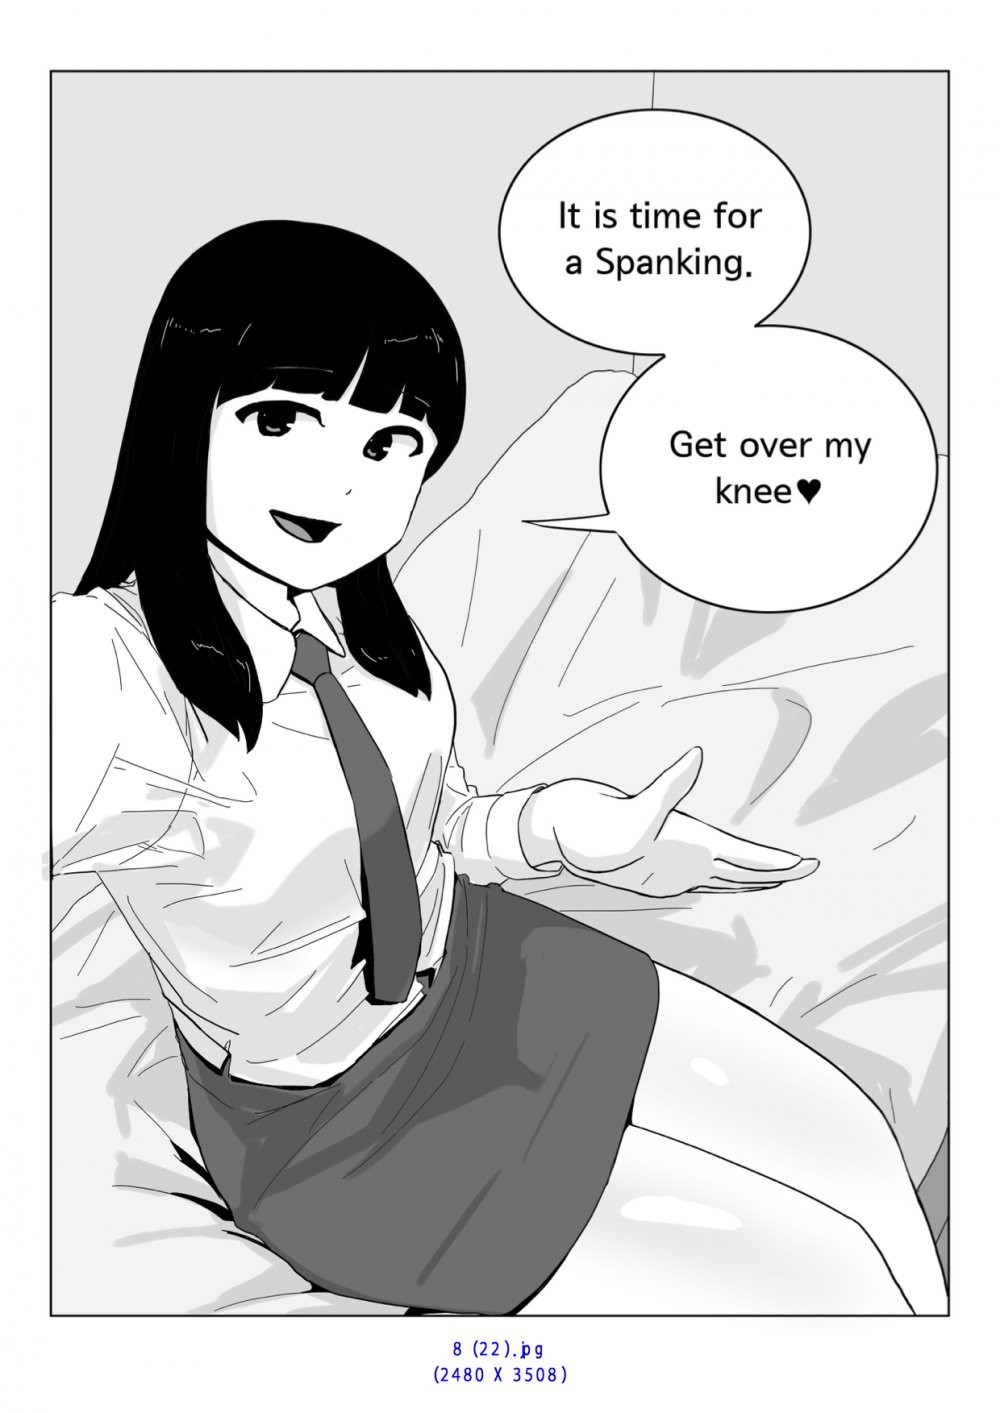 Spanking - Oshiritataki porn comic picture 40